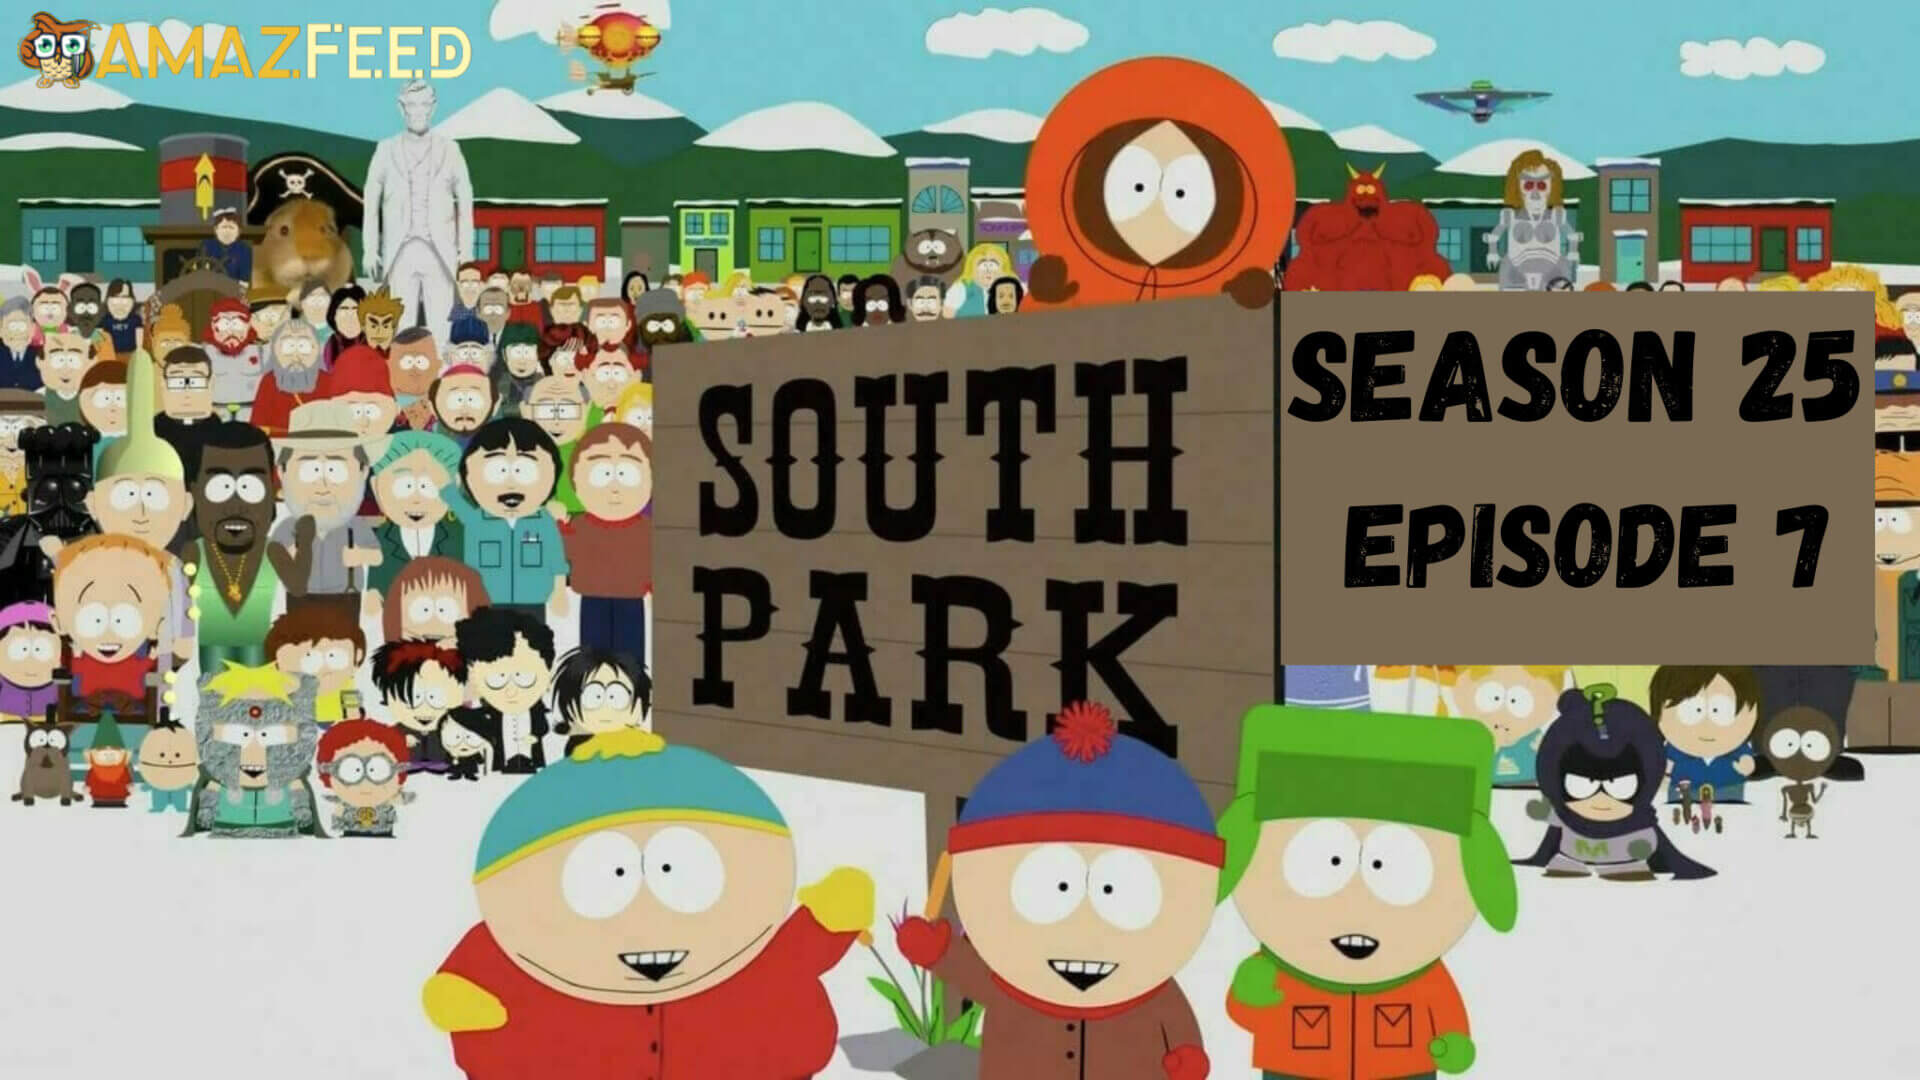 South Park Season 25 Episode 7